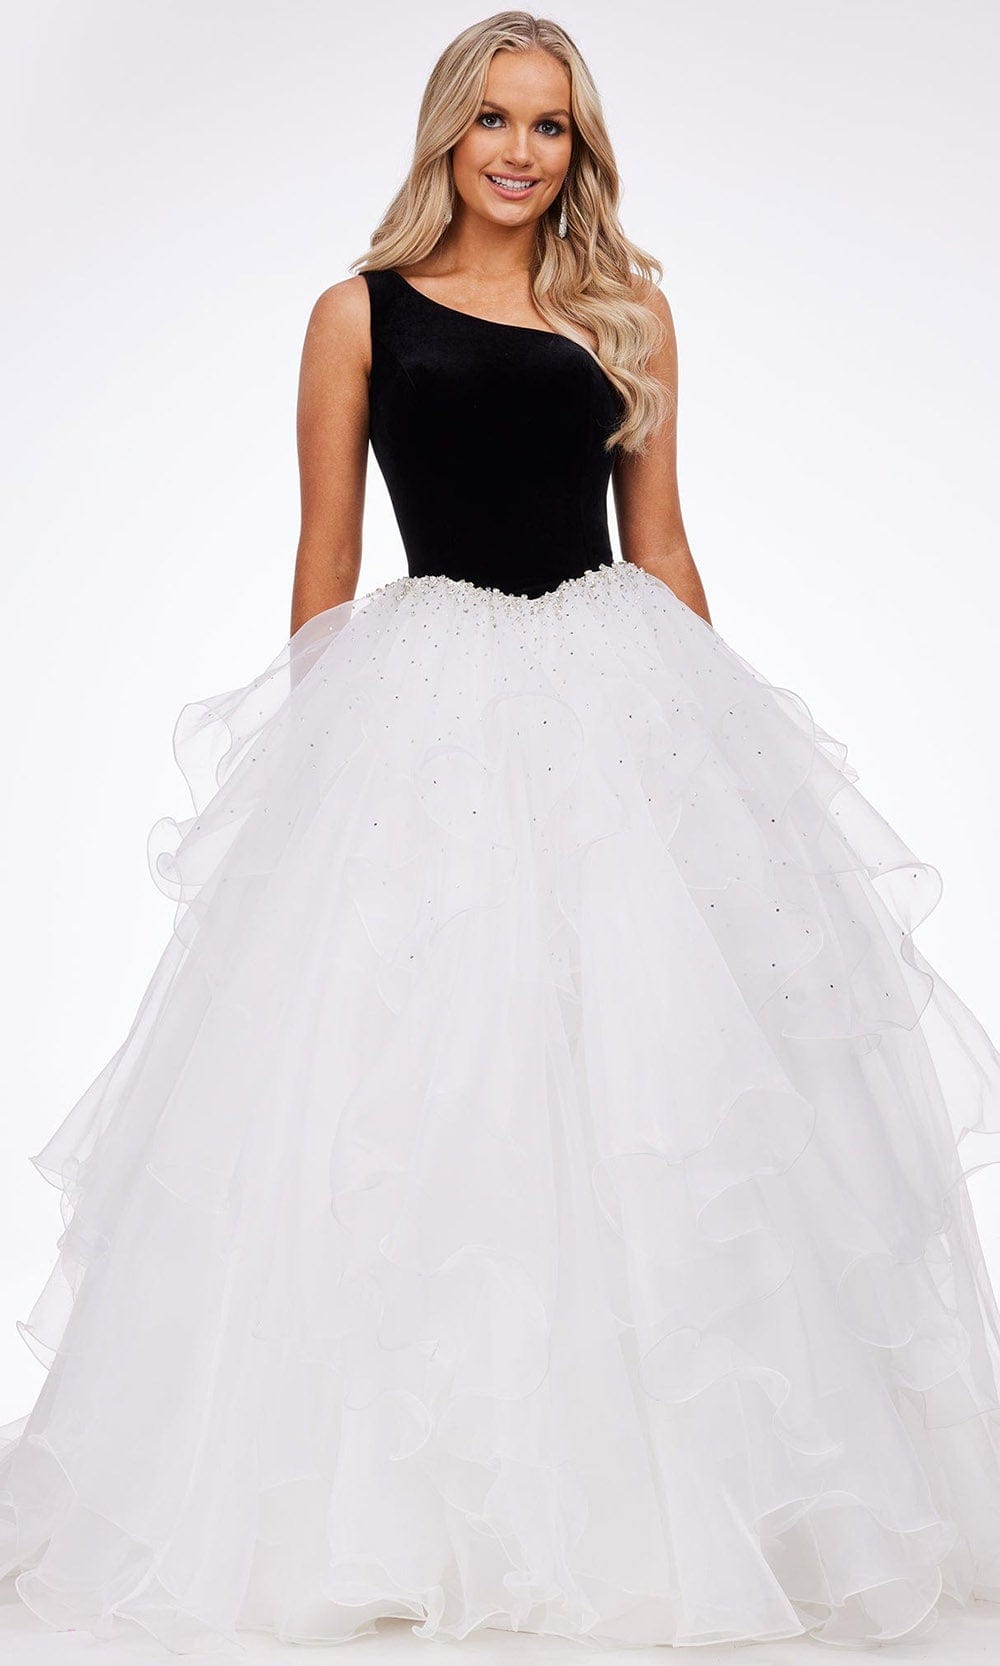 Ashley Lauren - 11165 Jeweled Organza Ballgown Prom Dresses 0 / Black/Ivory